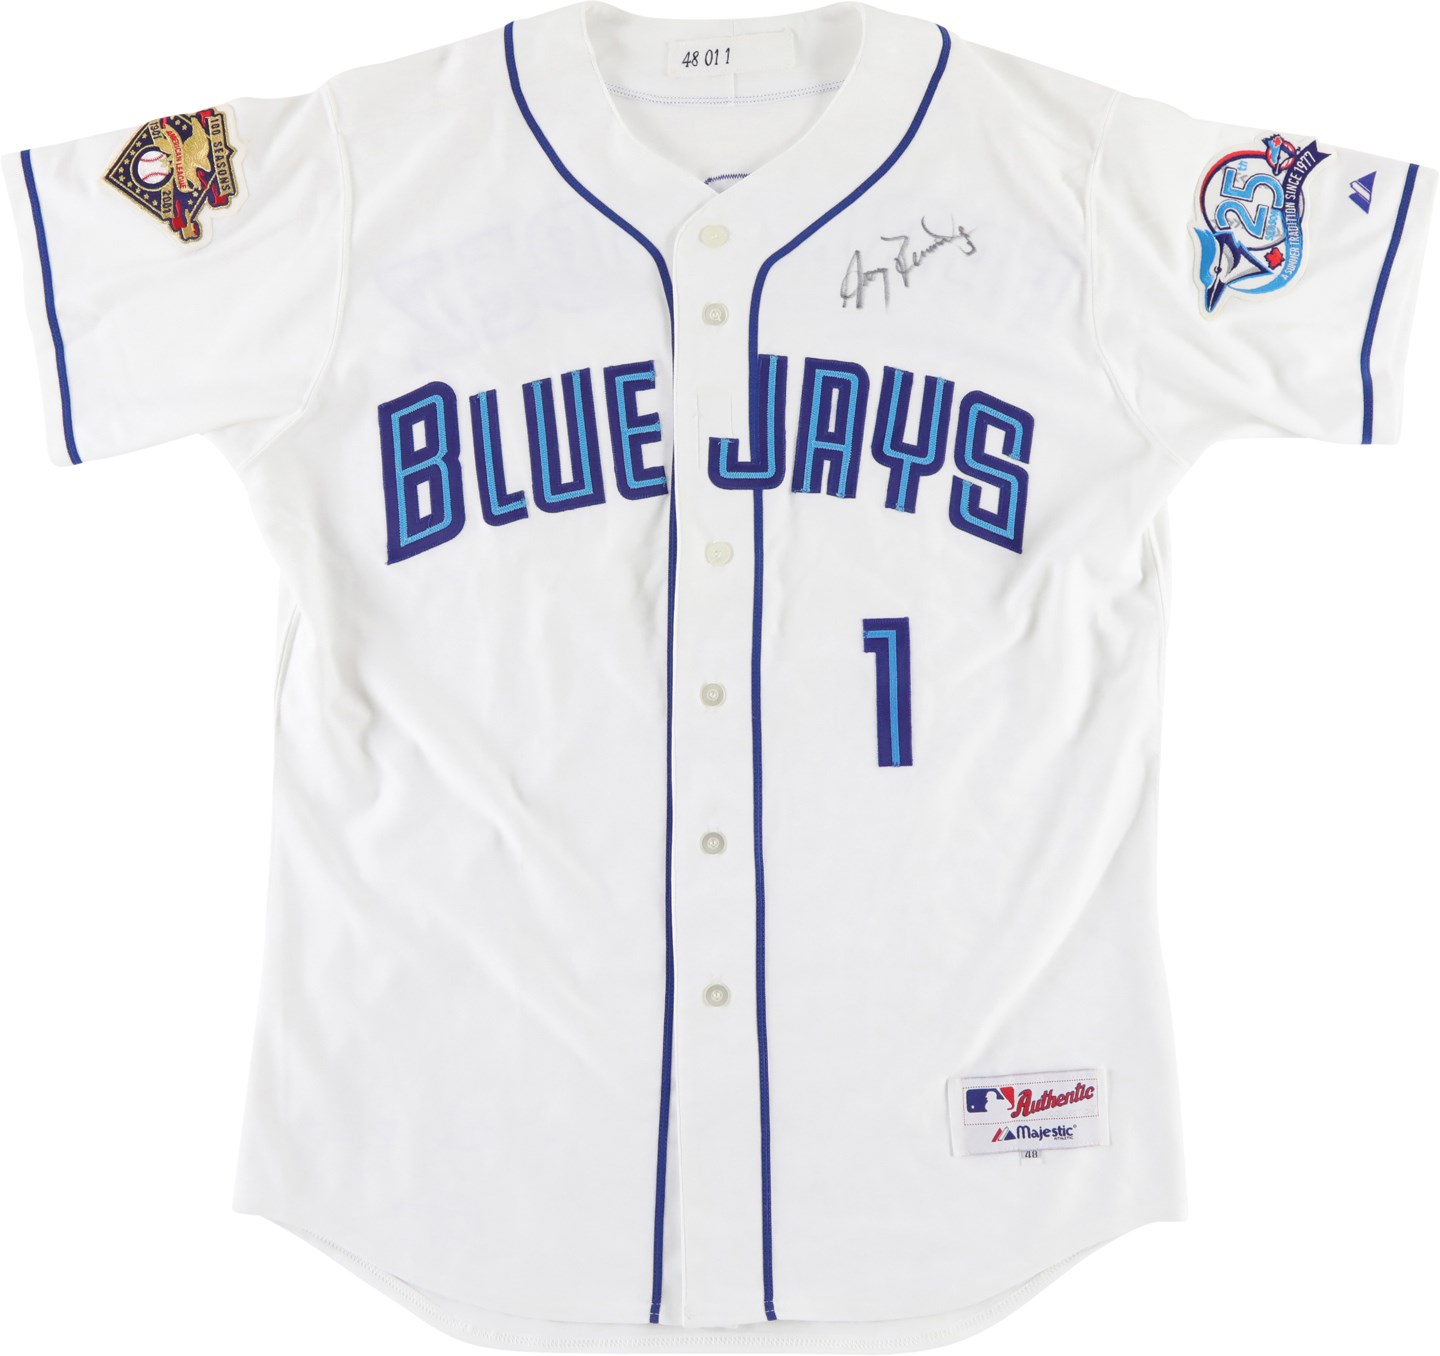 Baseball Equipment - 2001 Tony Fernandez Toronto Blue Jays Signed Game Worn Jersey Gifted to Cito Gaston